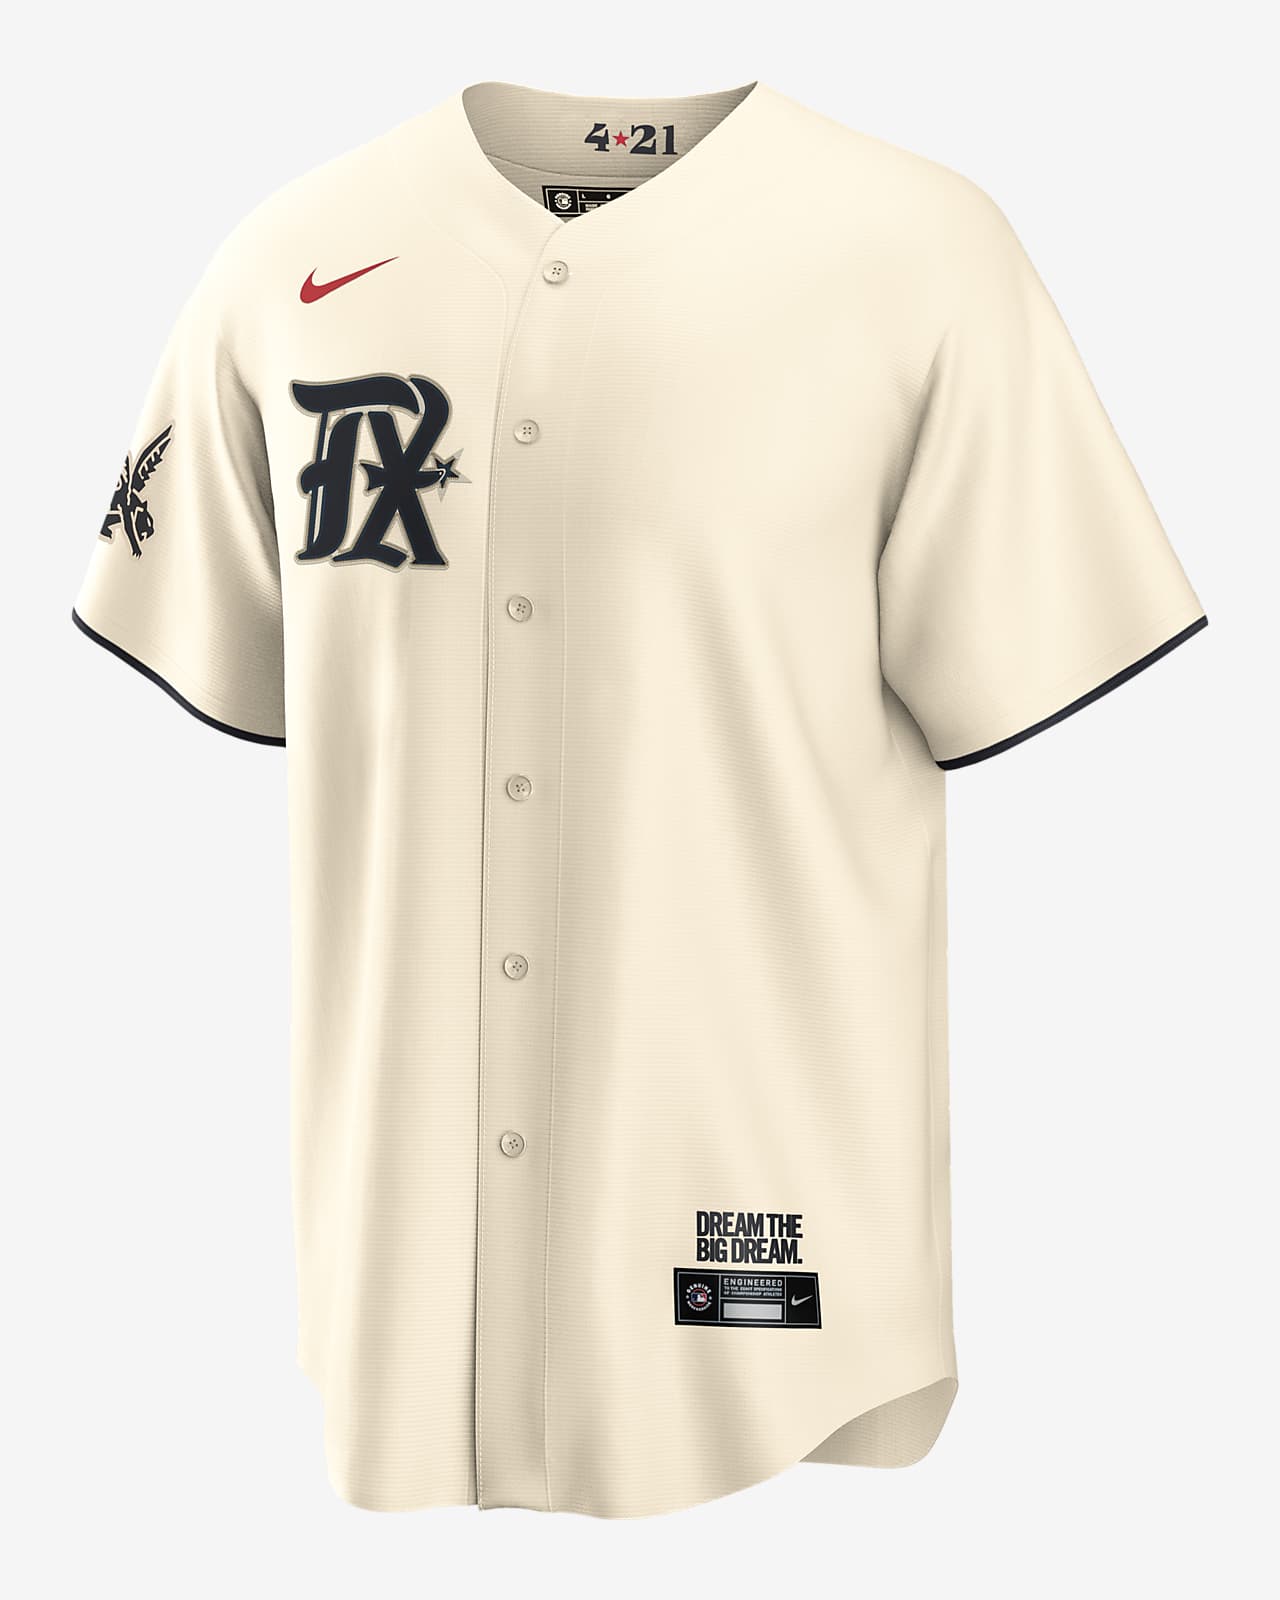 Nike put its logo on new MLB uniforms and baseball fans are mad online   SBNationcom